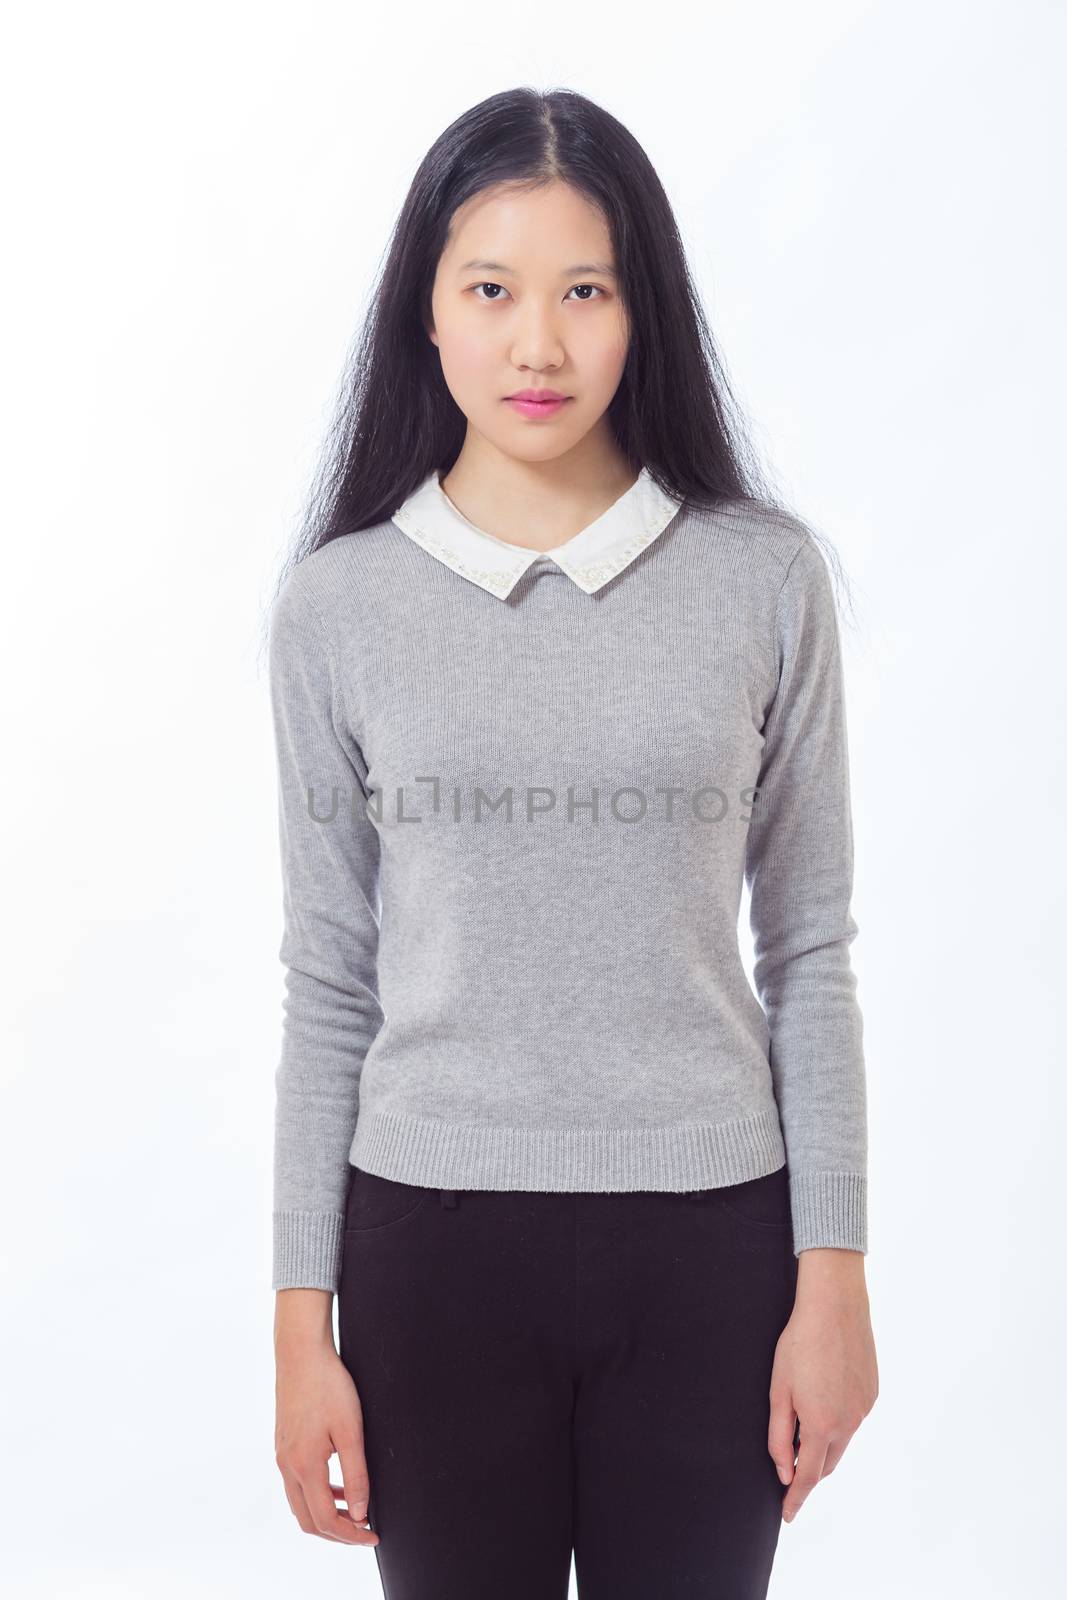 Three quarter length portrait of eenage Asian high school girl